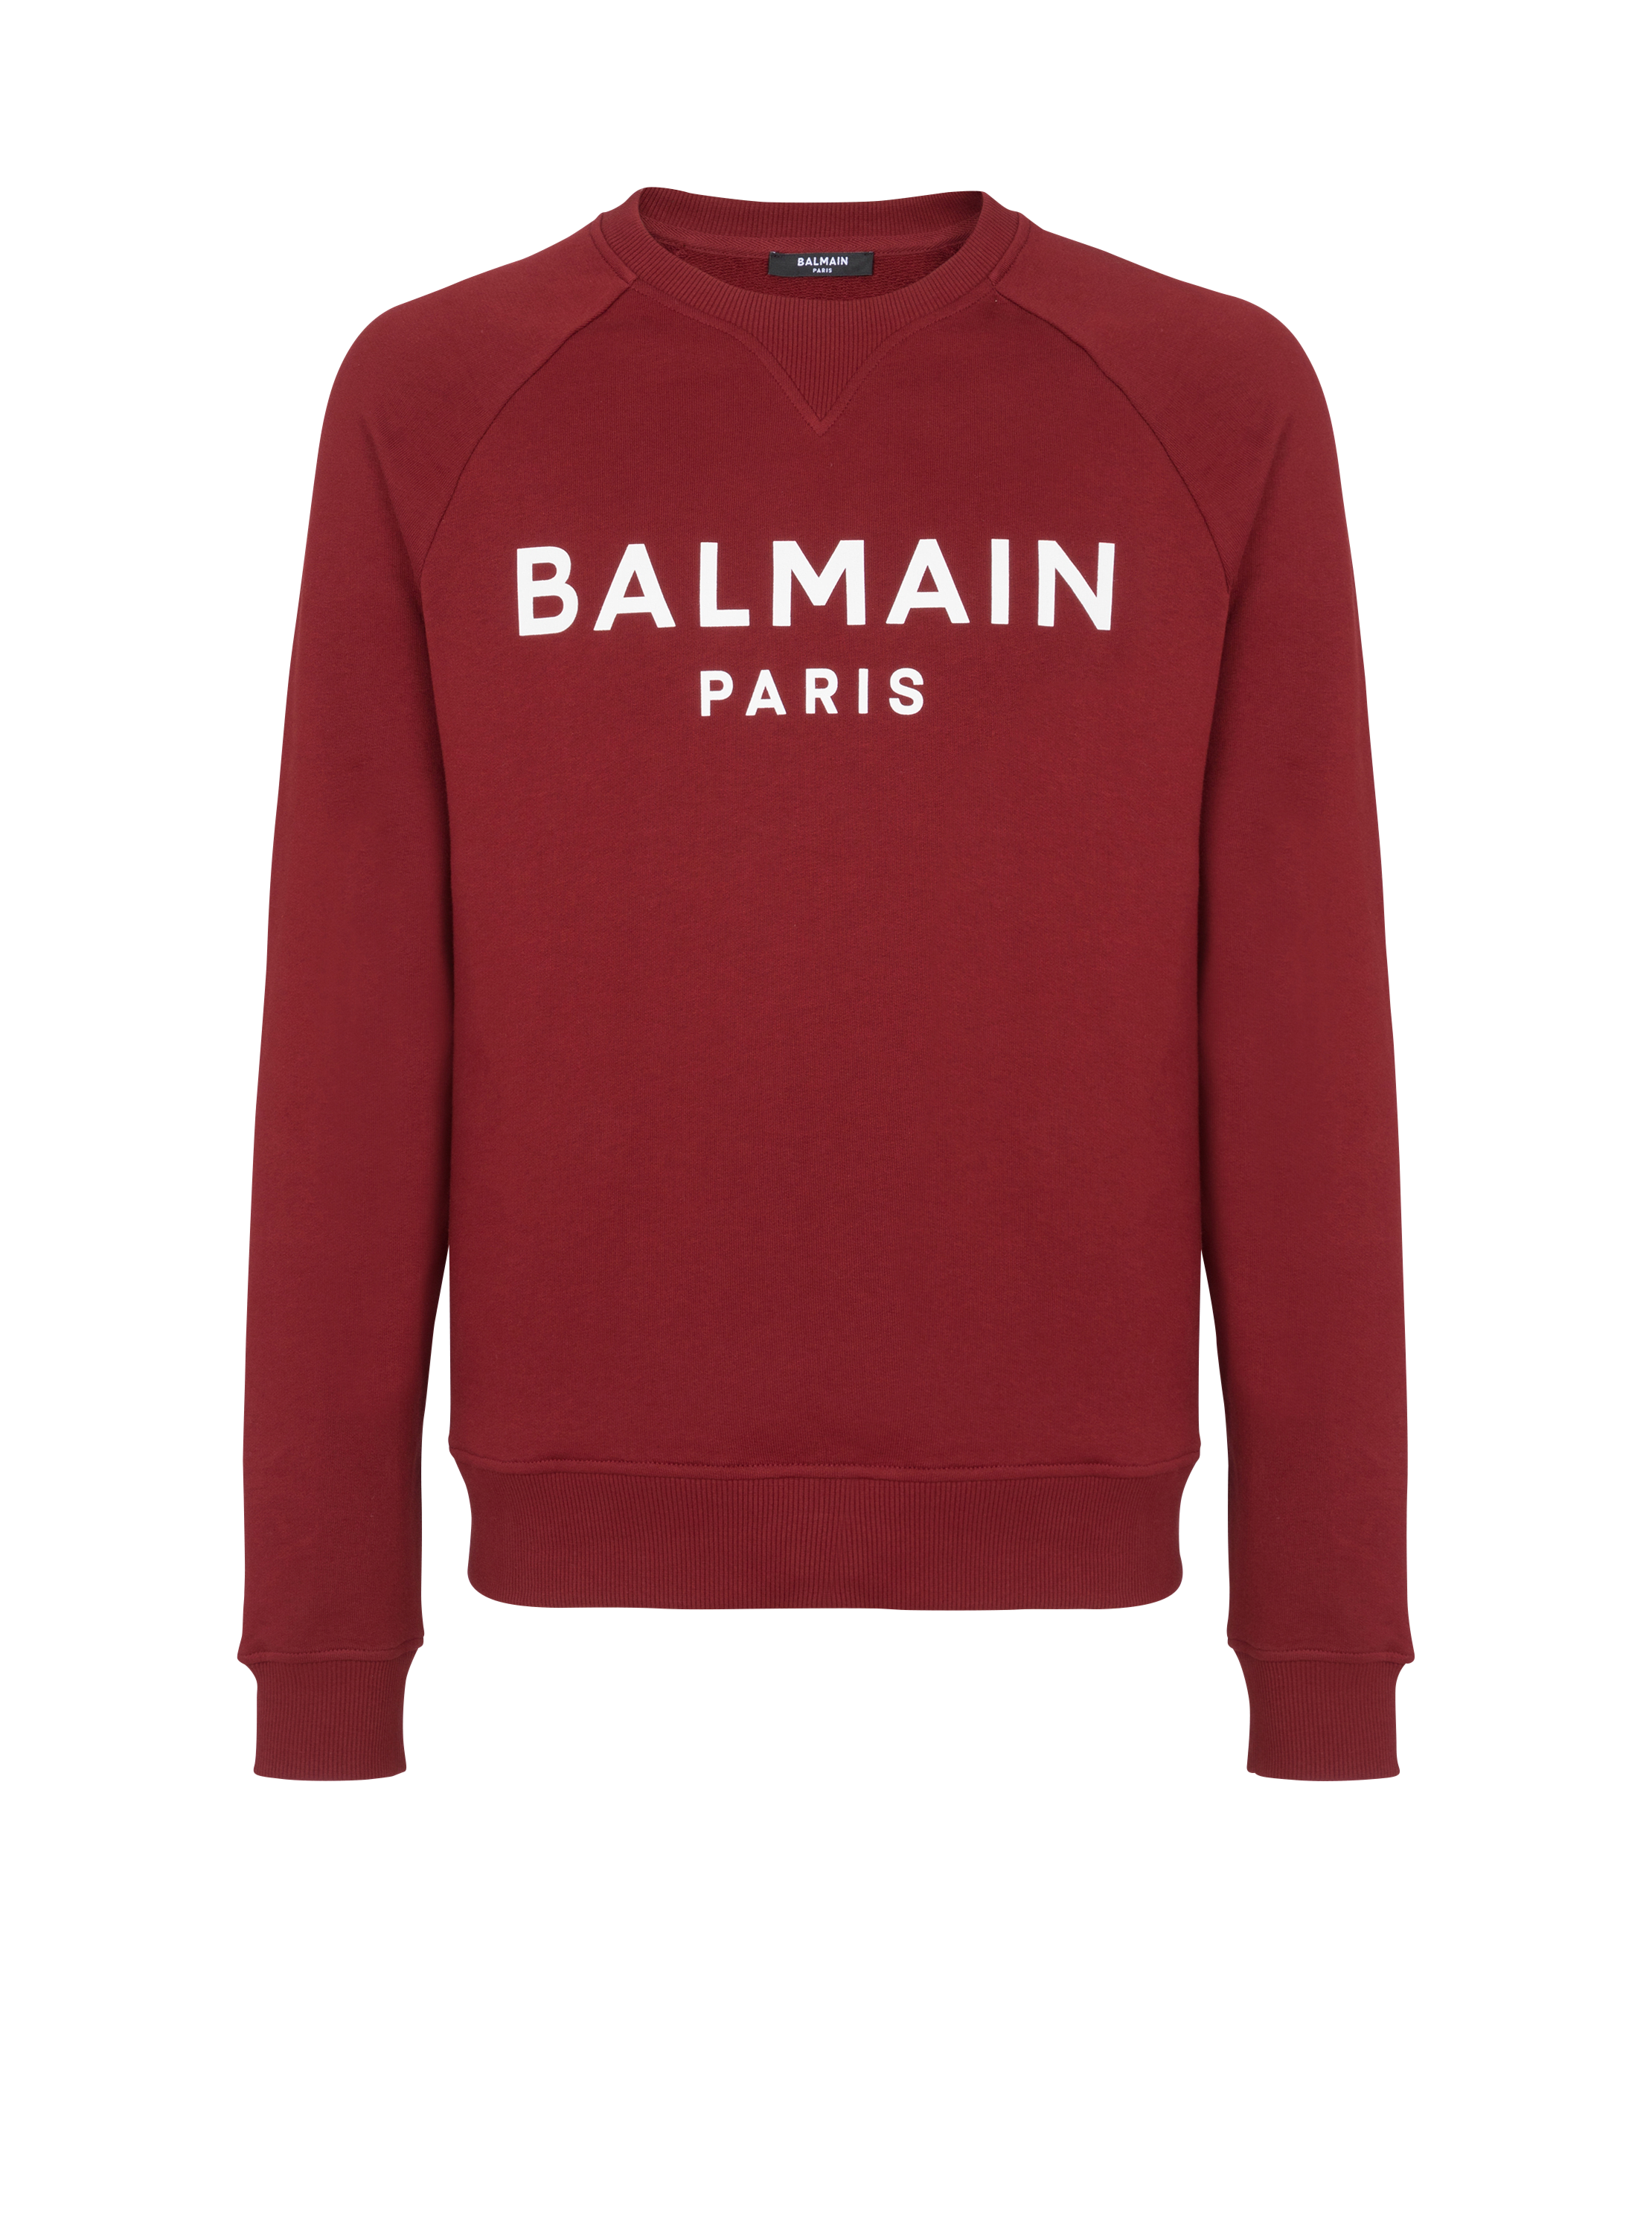 Balmain Paris sweatshirt - |